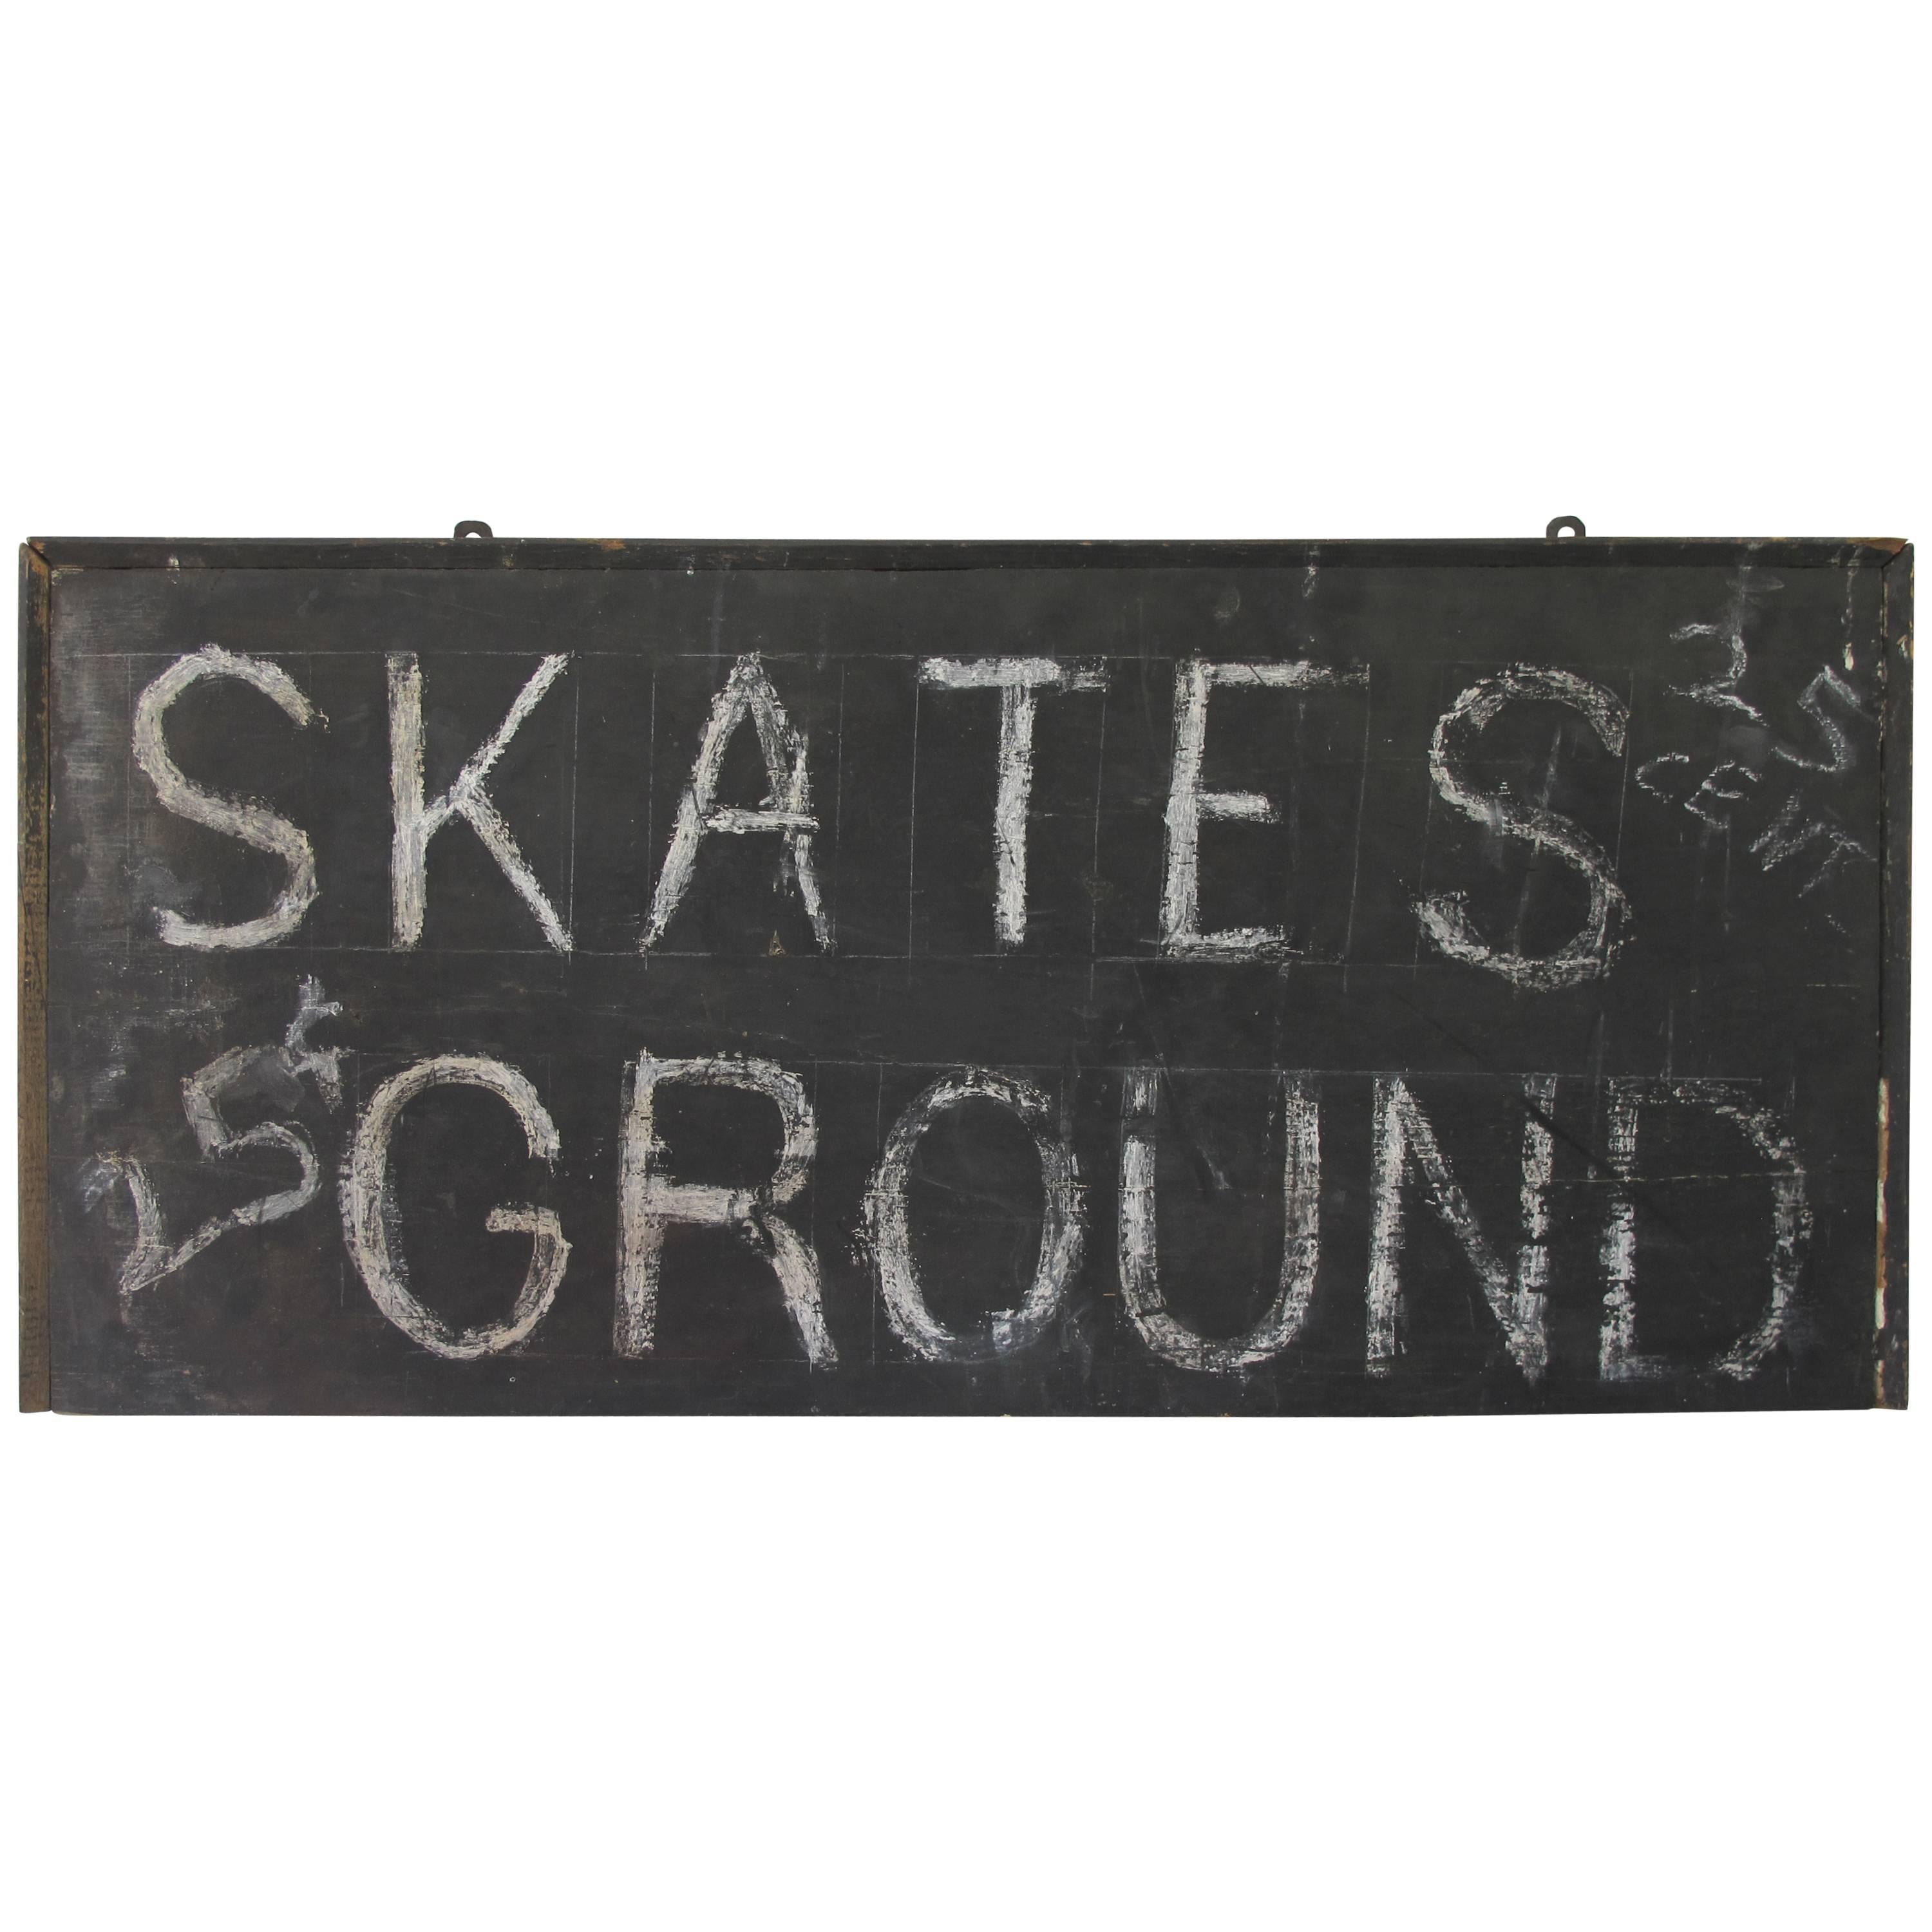 Wood Sign Skates Ground For Sale